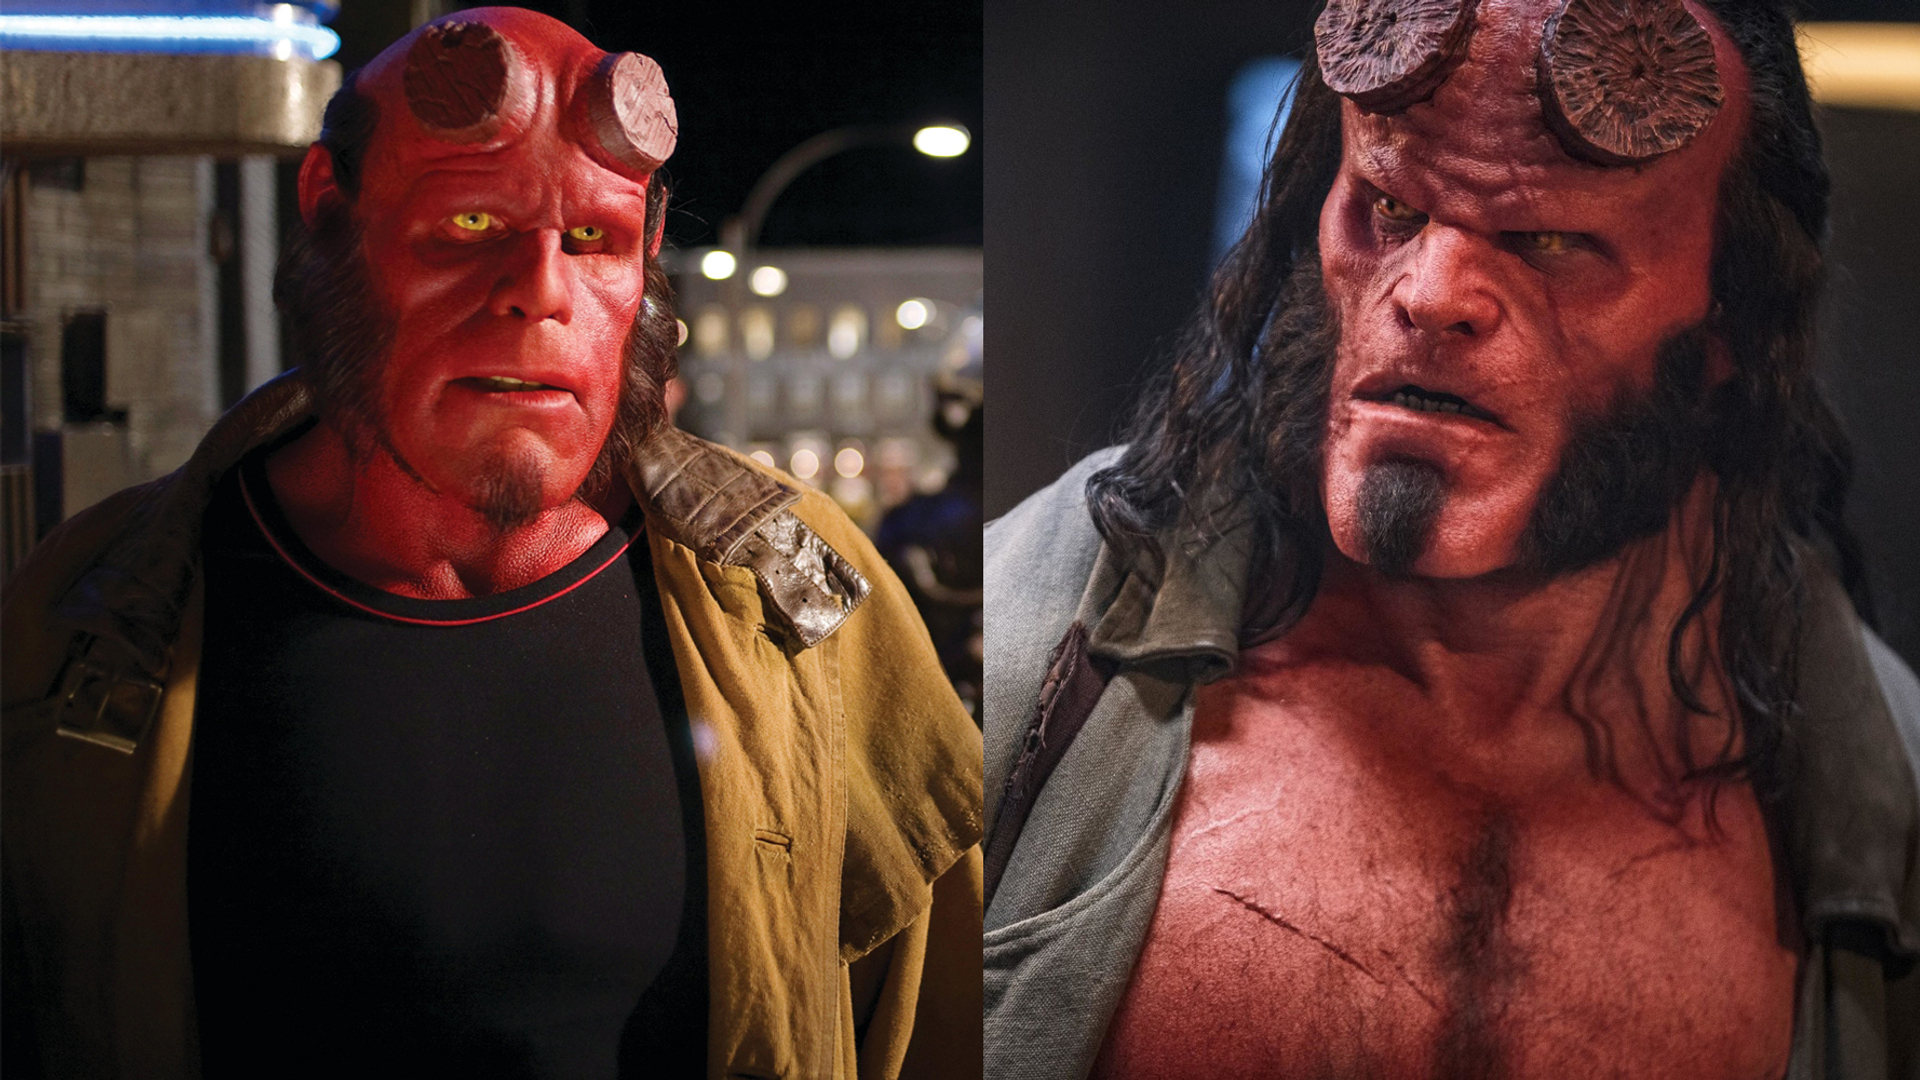 Hellboy portrayed by Ron Perlman VS David Harbour